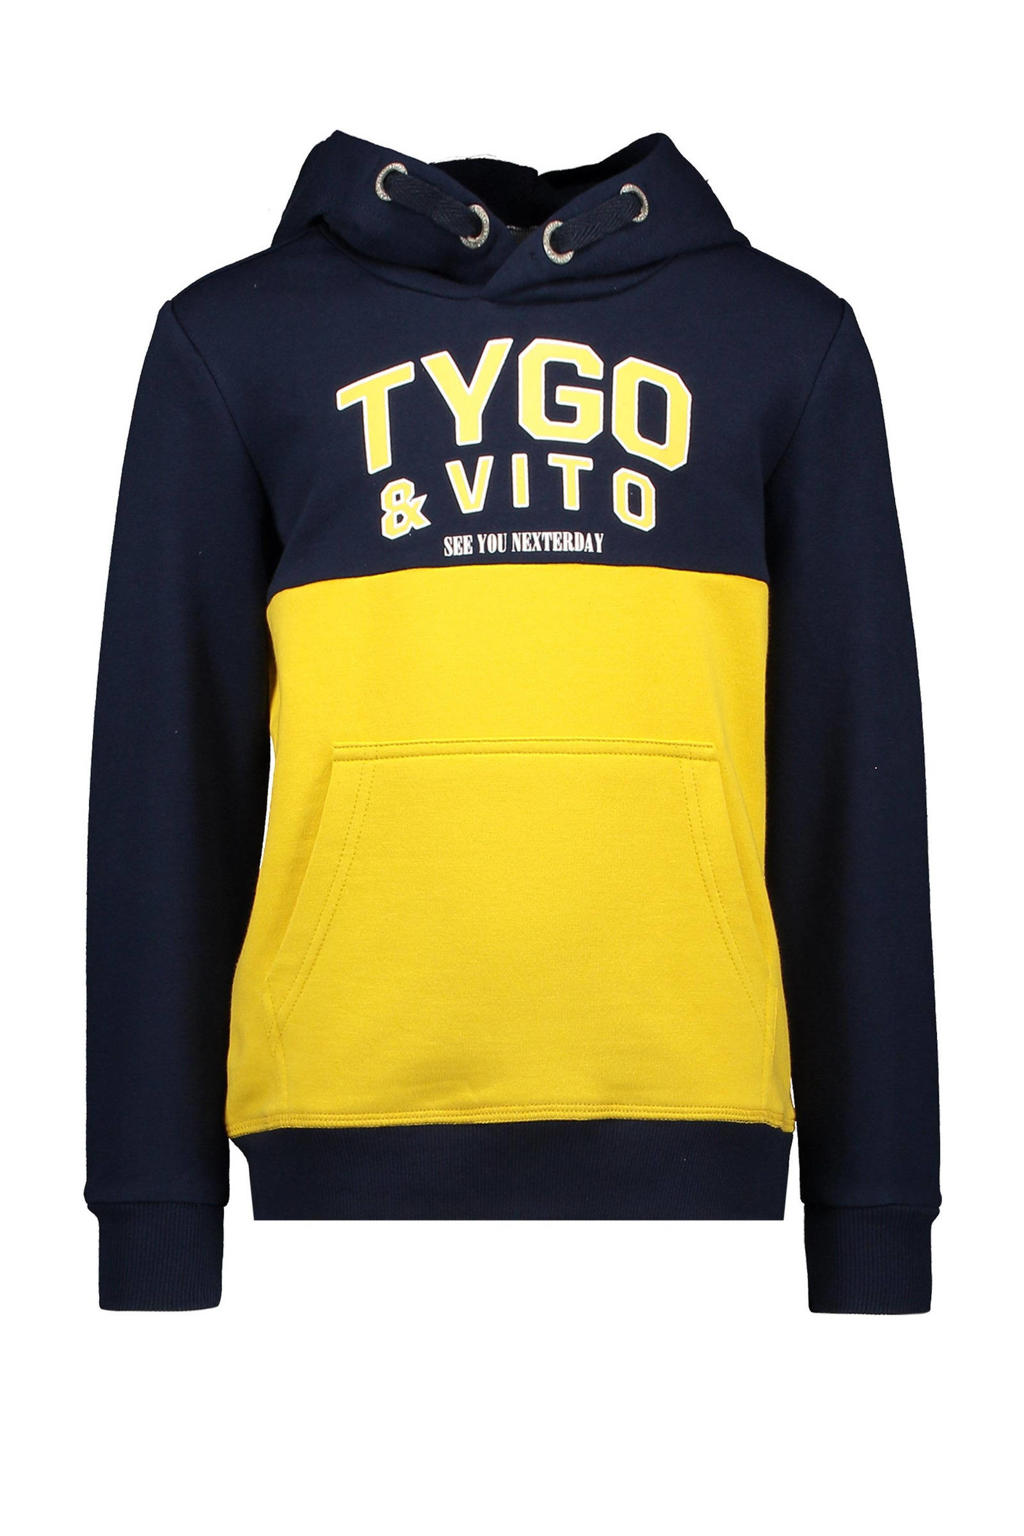 TYGO & vito sweater met logo donkerblauw/geel